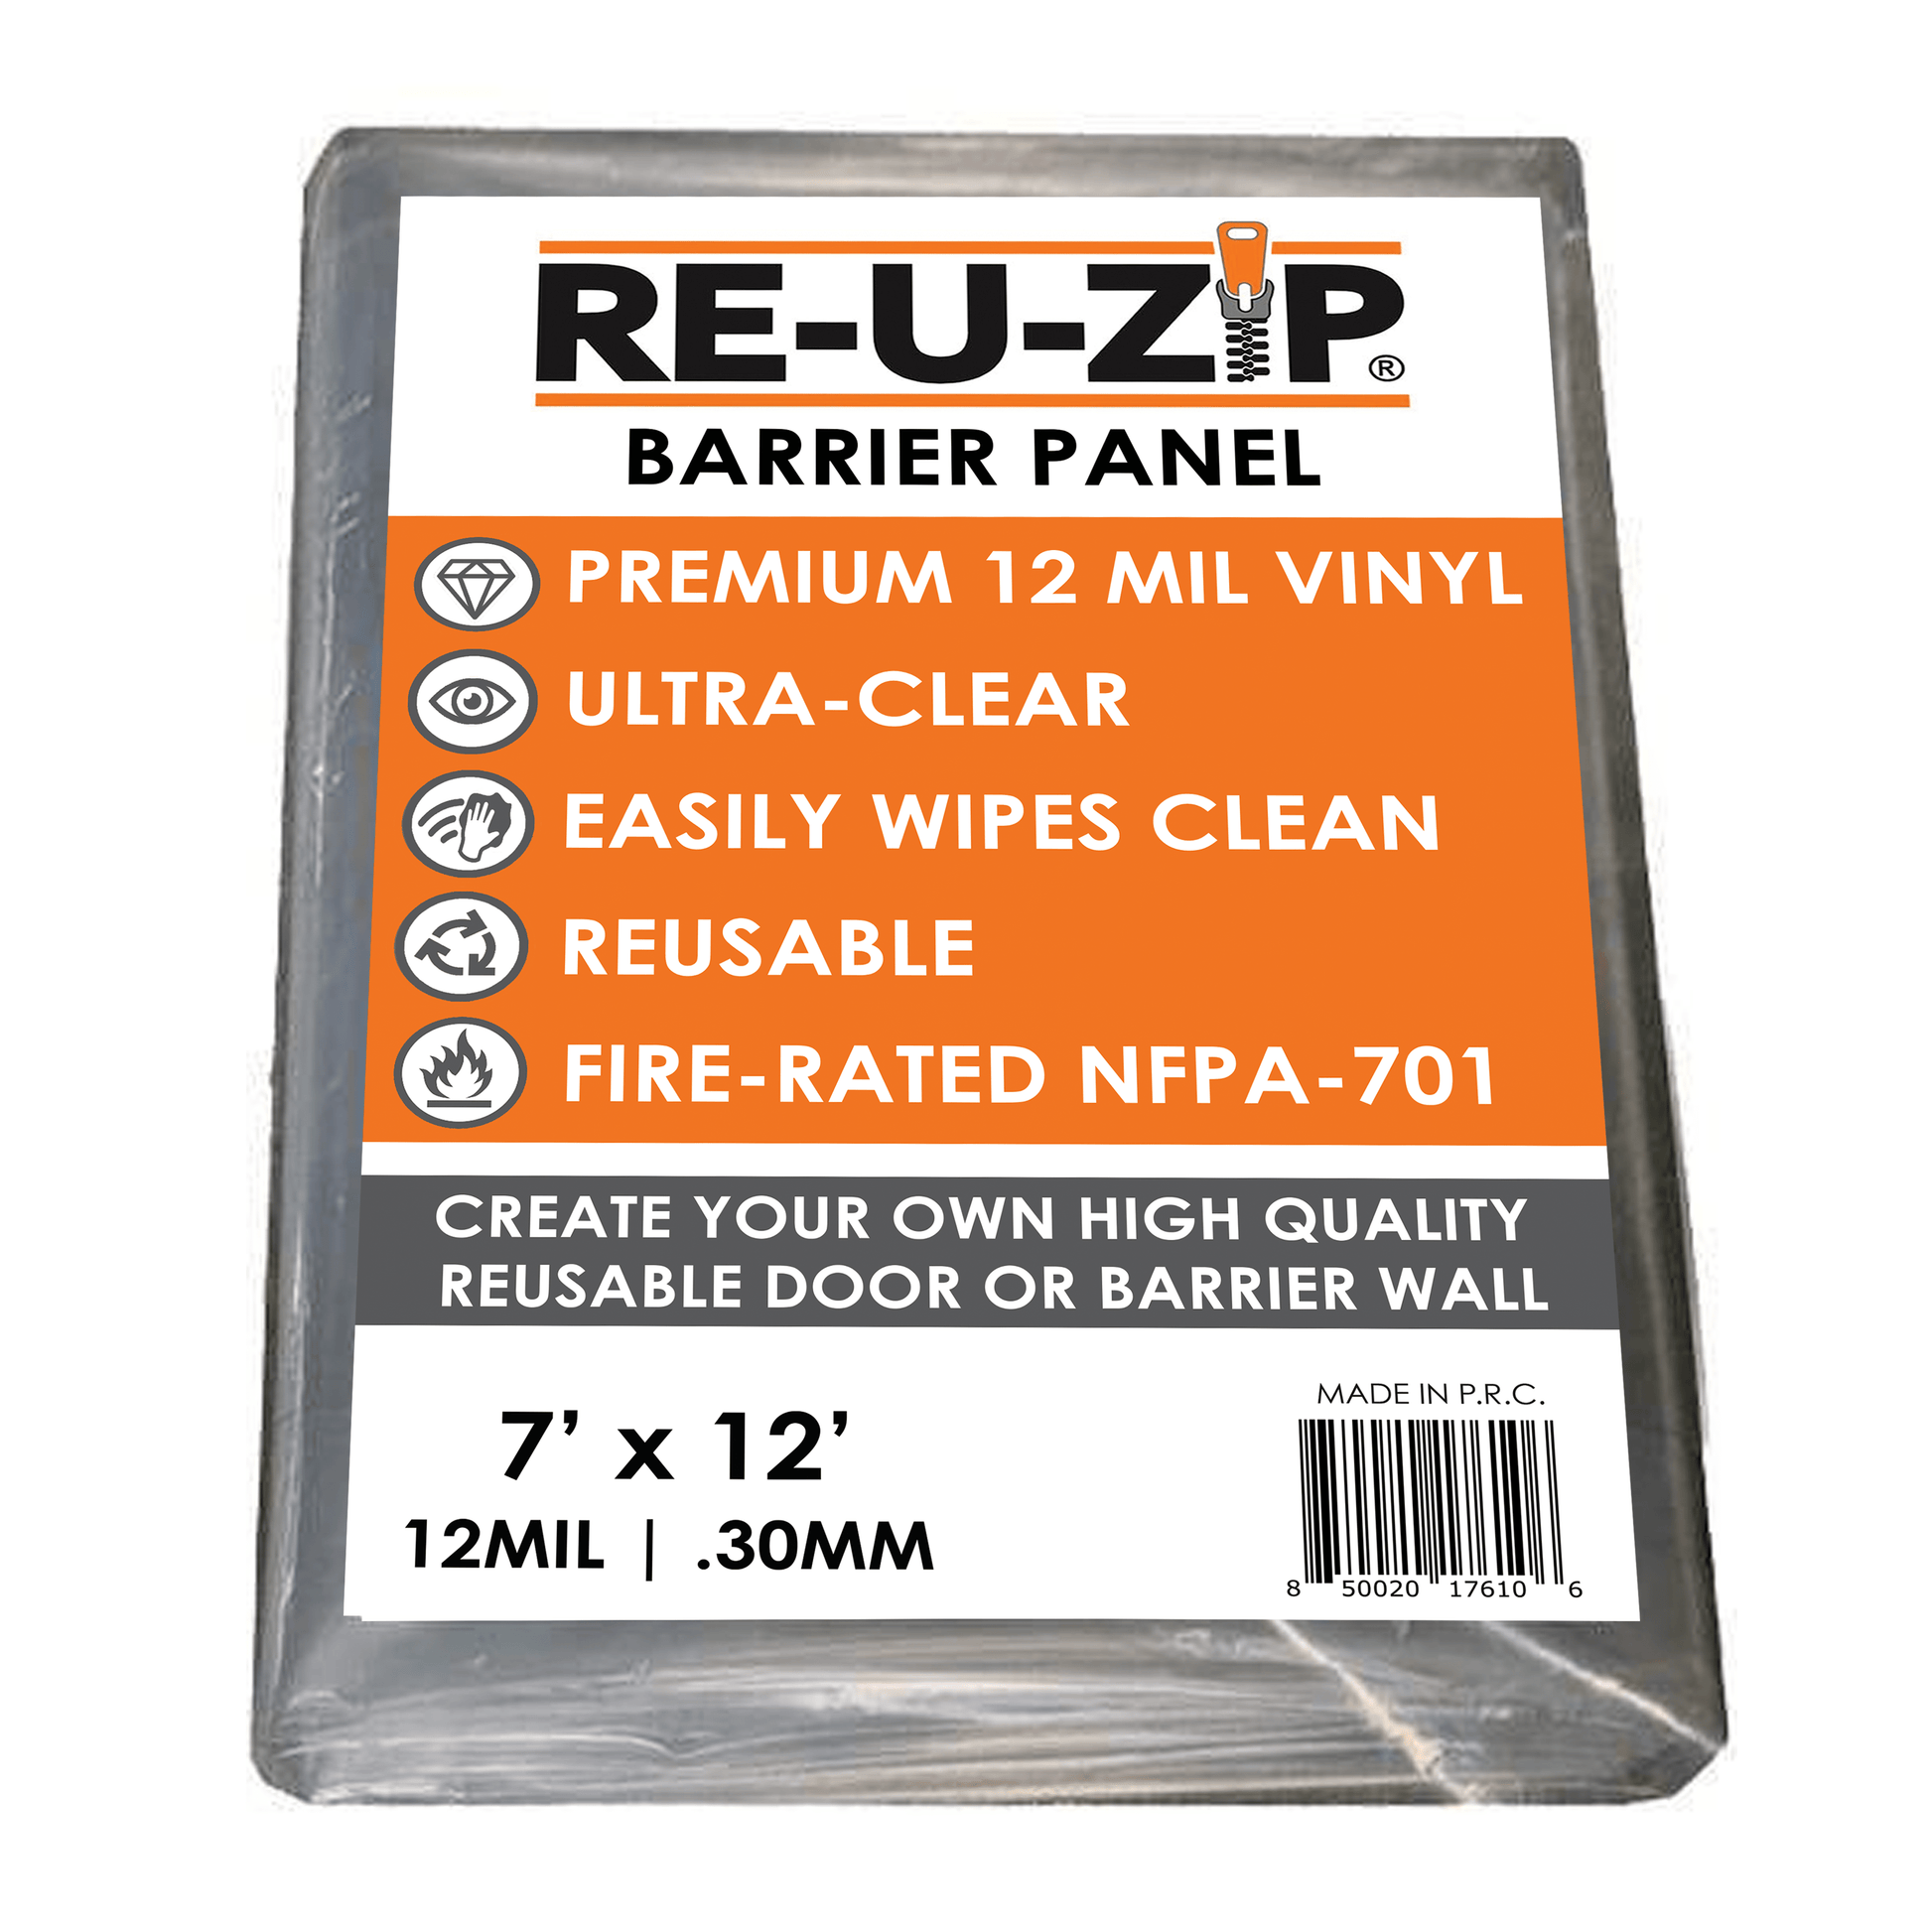 RE-U-ZIP INNOVATIVE DUST BARRIER SOLUTIONS Construction 7 x 12 FT RE-U-ZIP™ Reusable Dust Barrier Panel